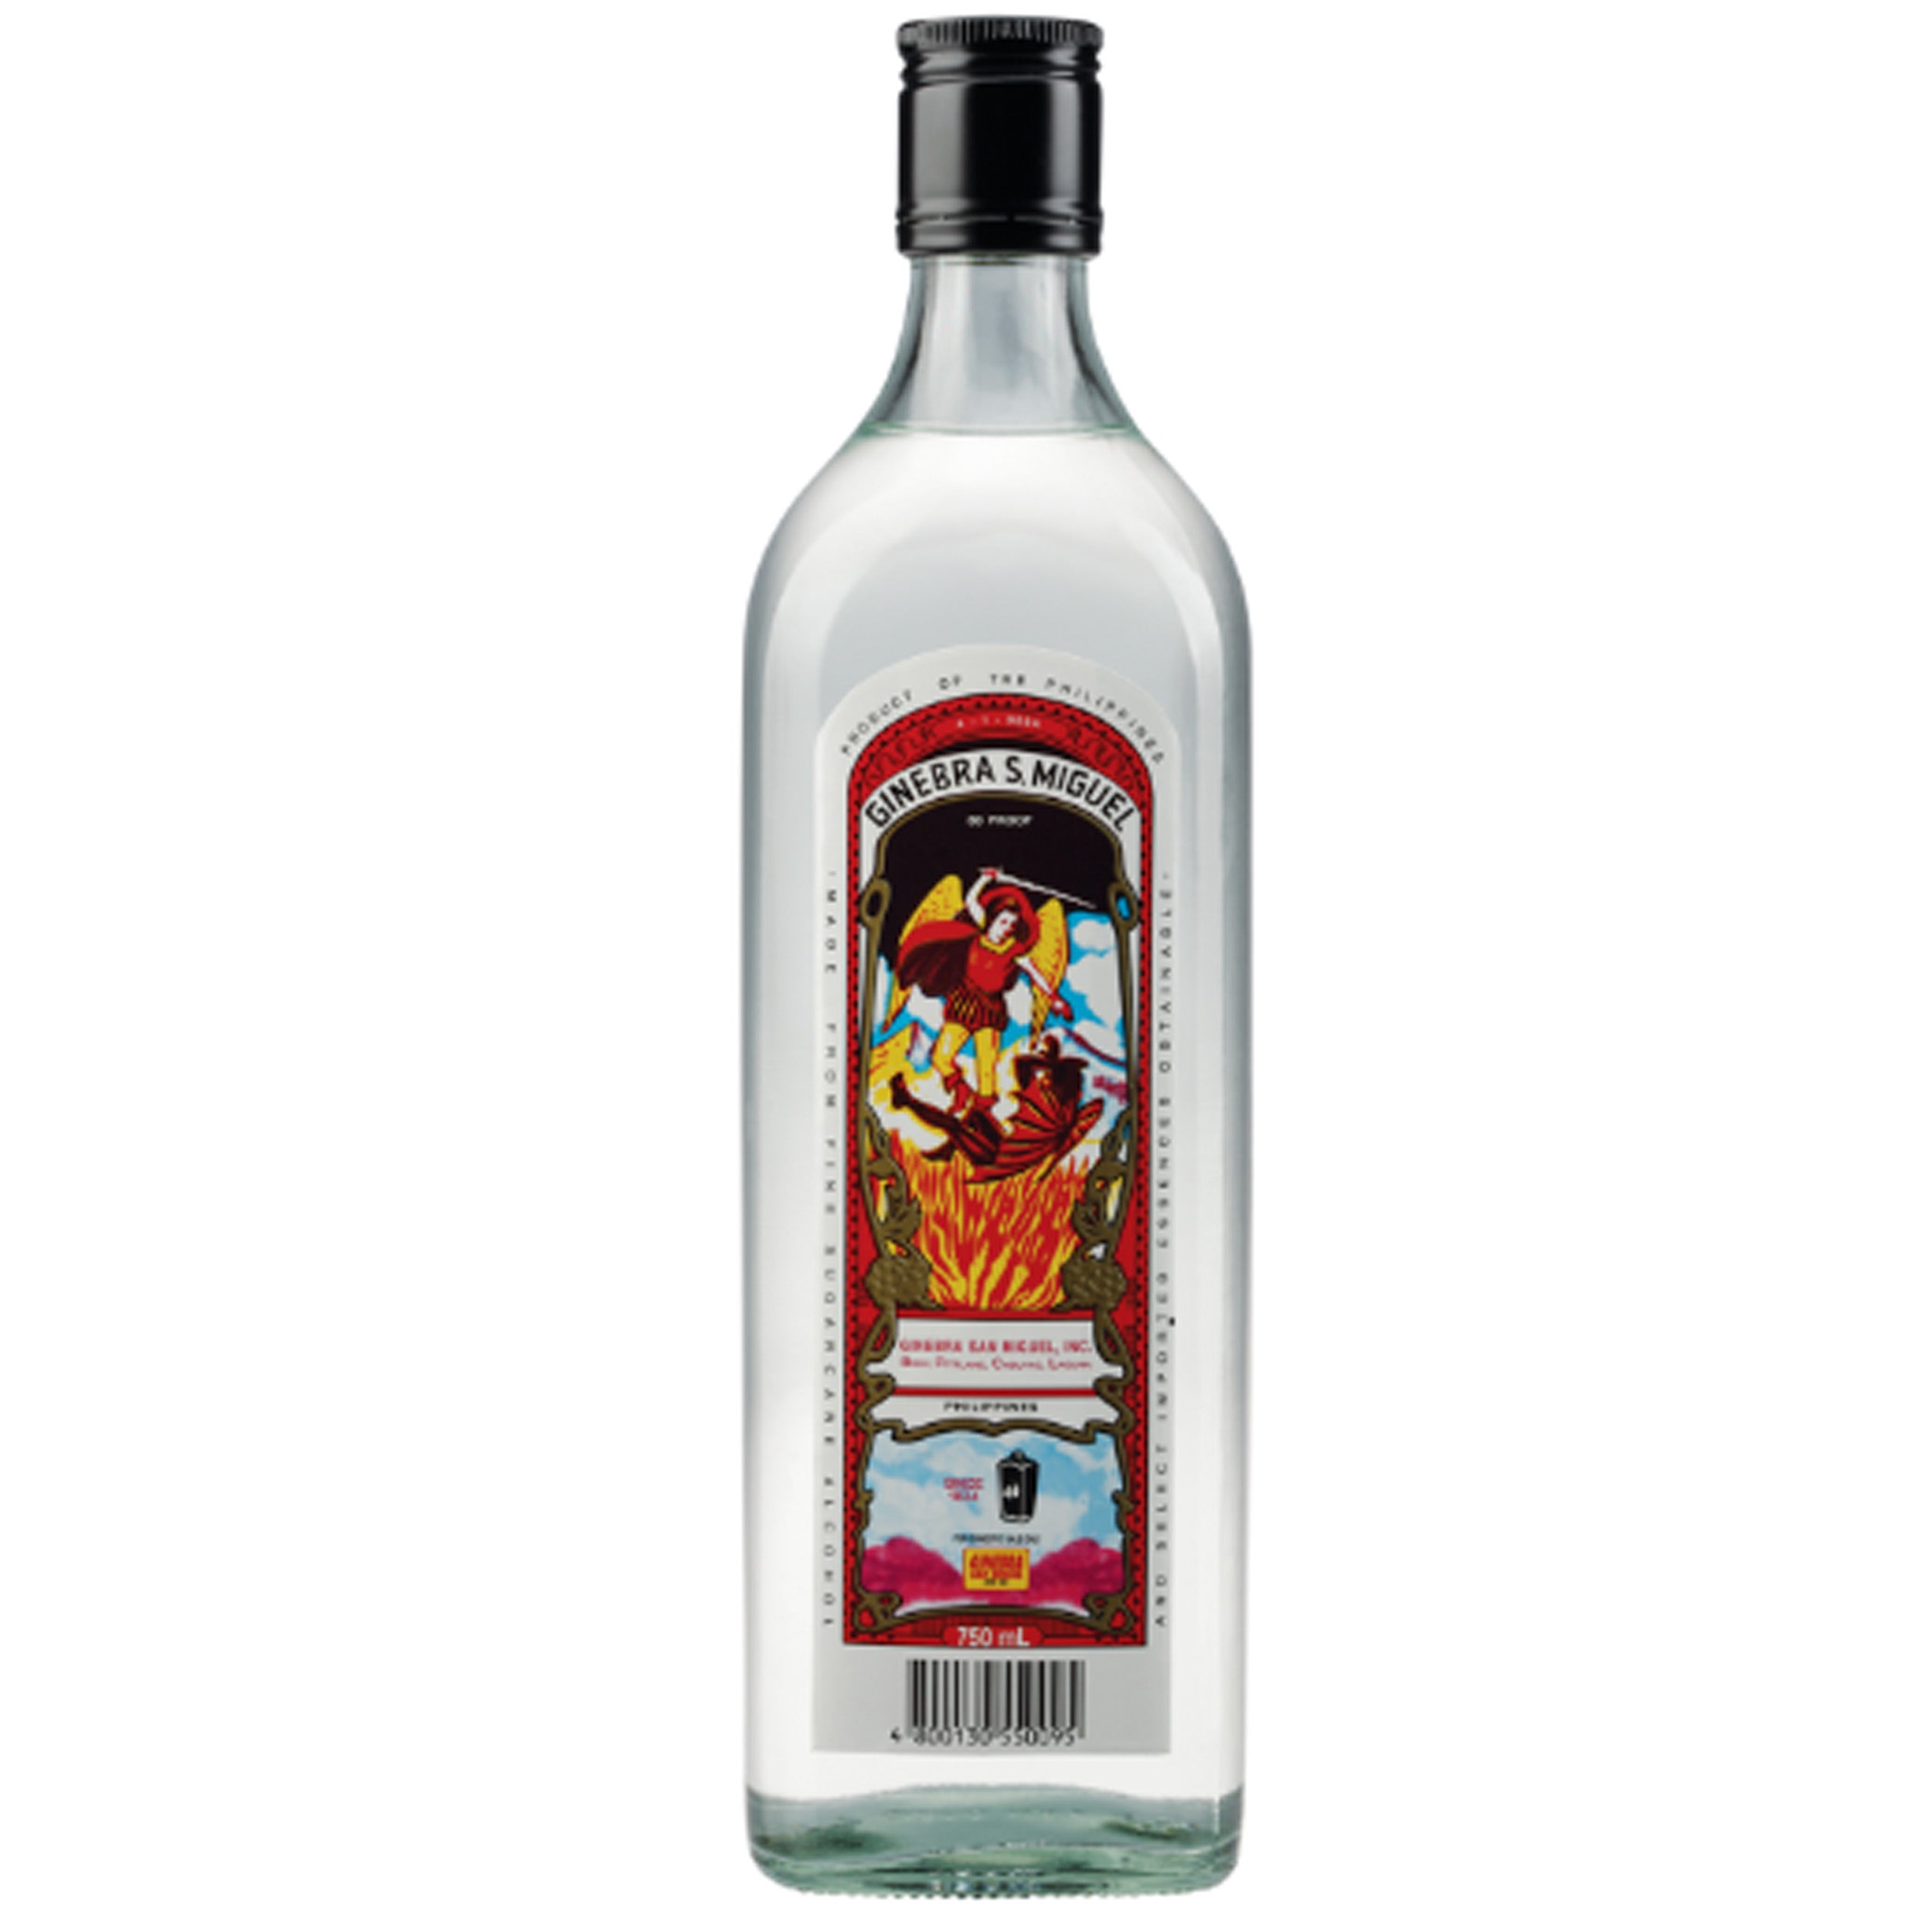 Dry Liquor – San Miguel Ginebra Gin Chips